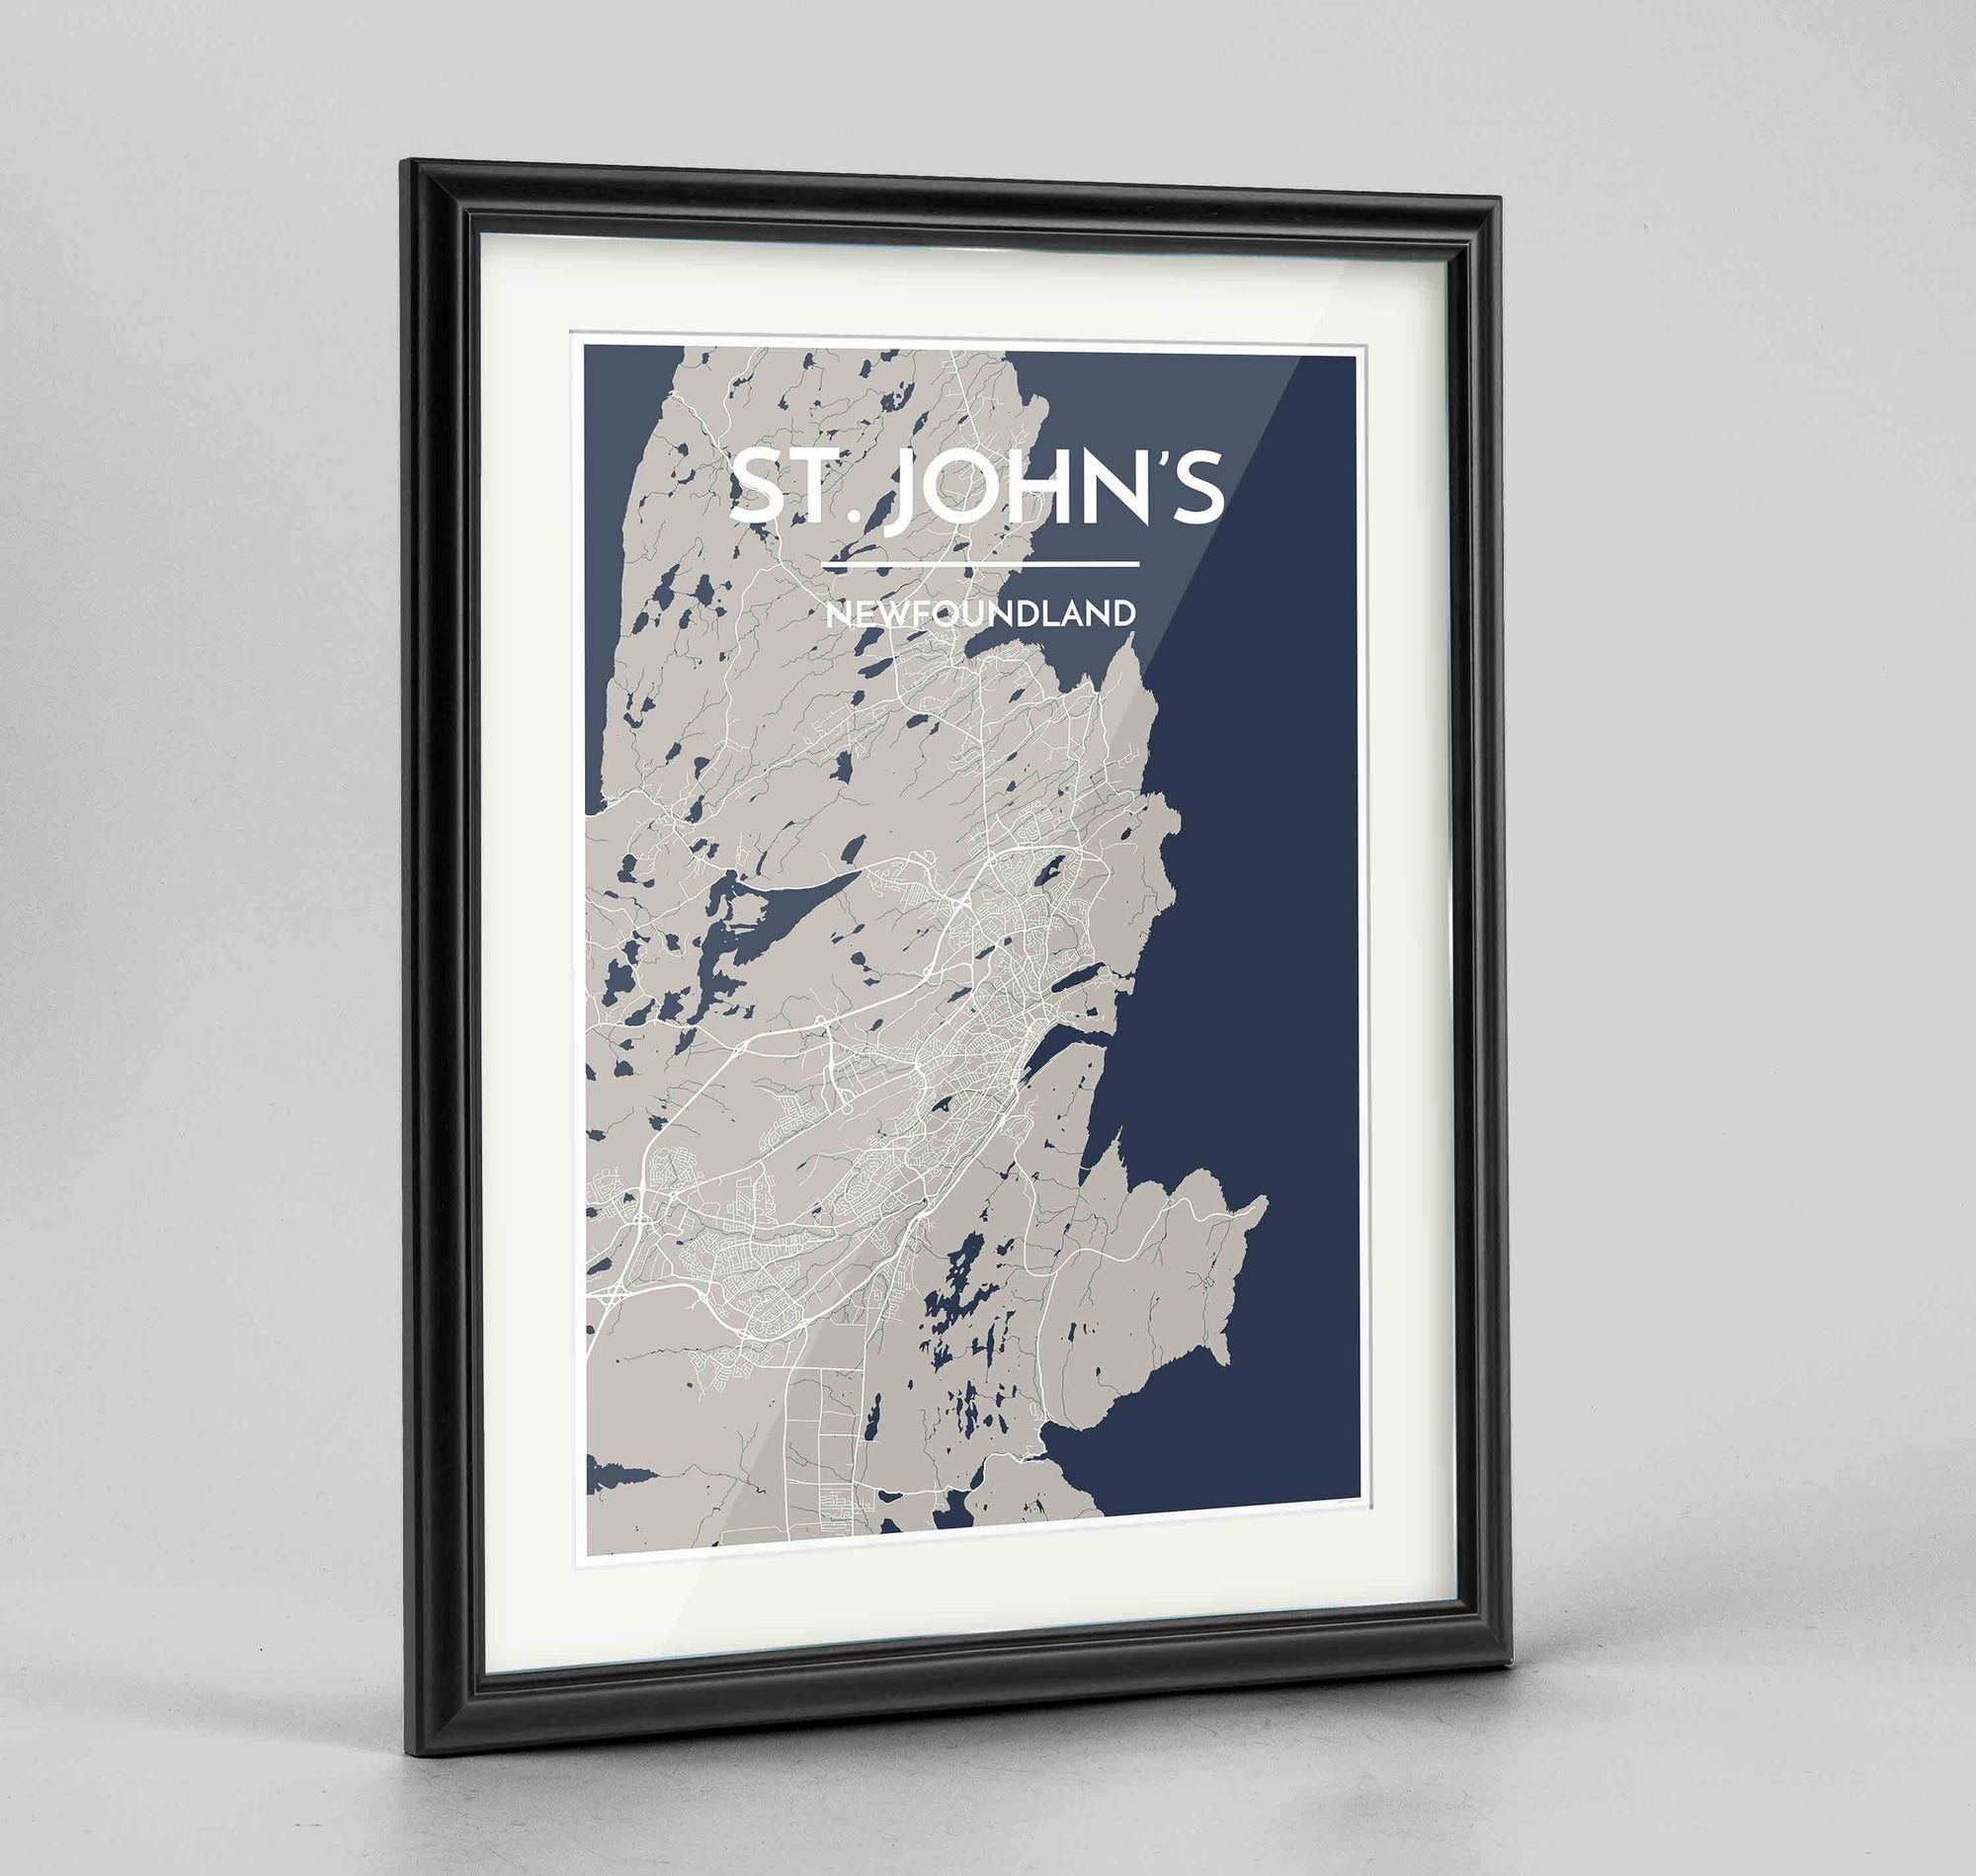 Framed St John's City Map 24x36" Traditional Black frame Point Two Design Group